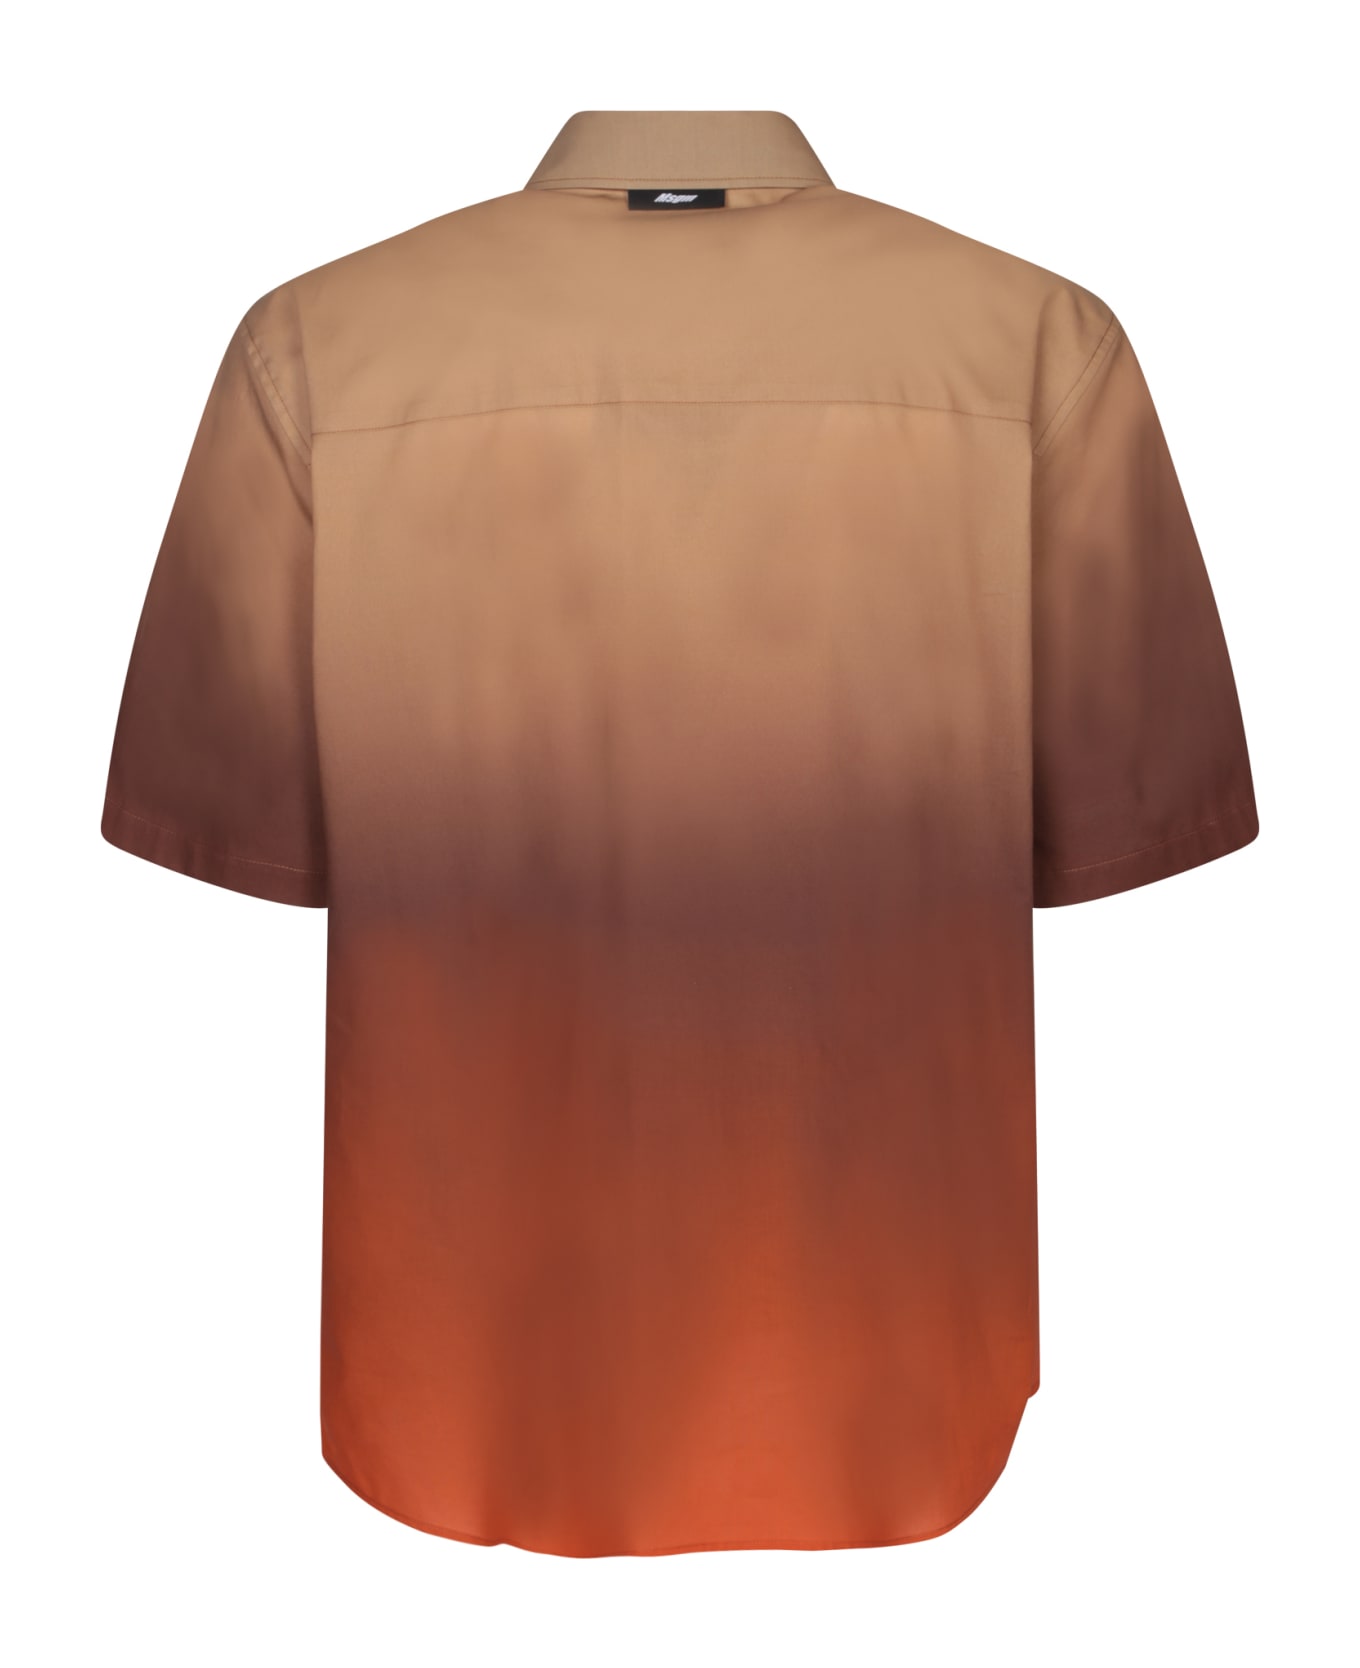 MSGM Dregradã¨ Beige/orange Shirt - Beige